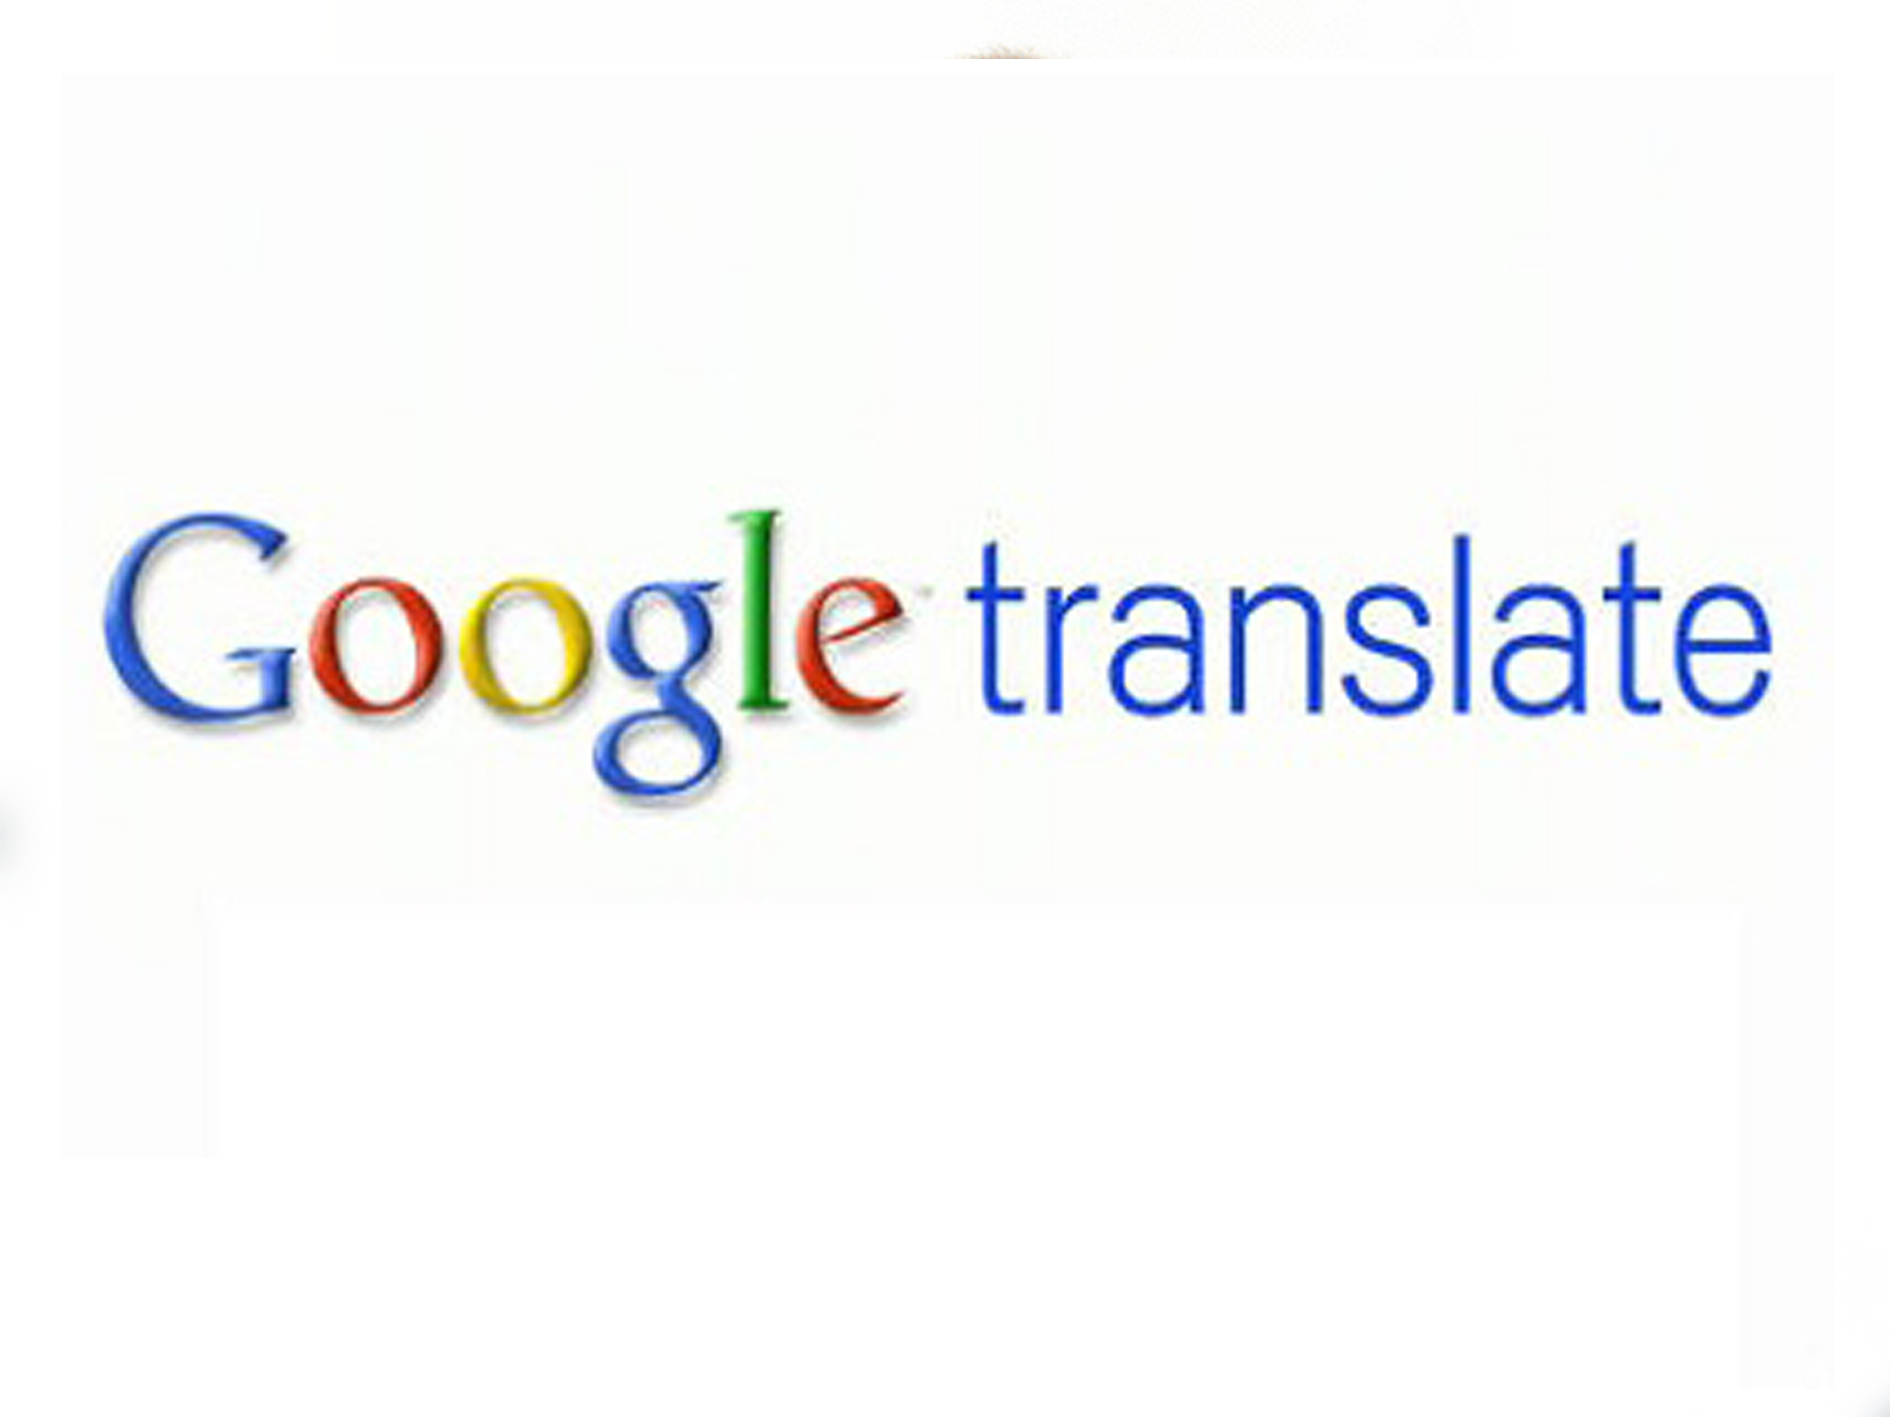 Transla. Гугл переводчик. Переводчик лого. Гугл переводчик лого. История создания Google Translate логотип.